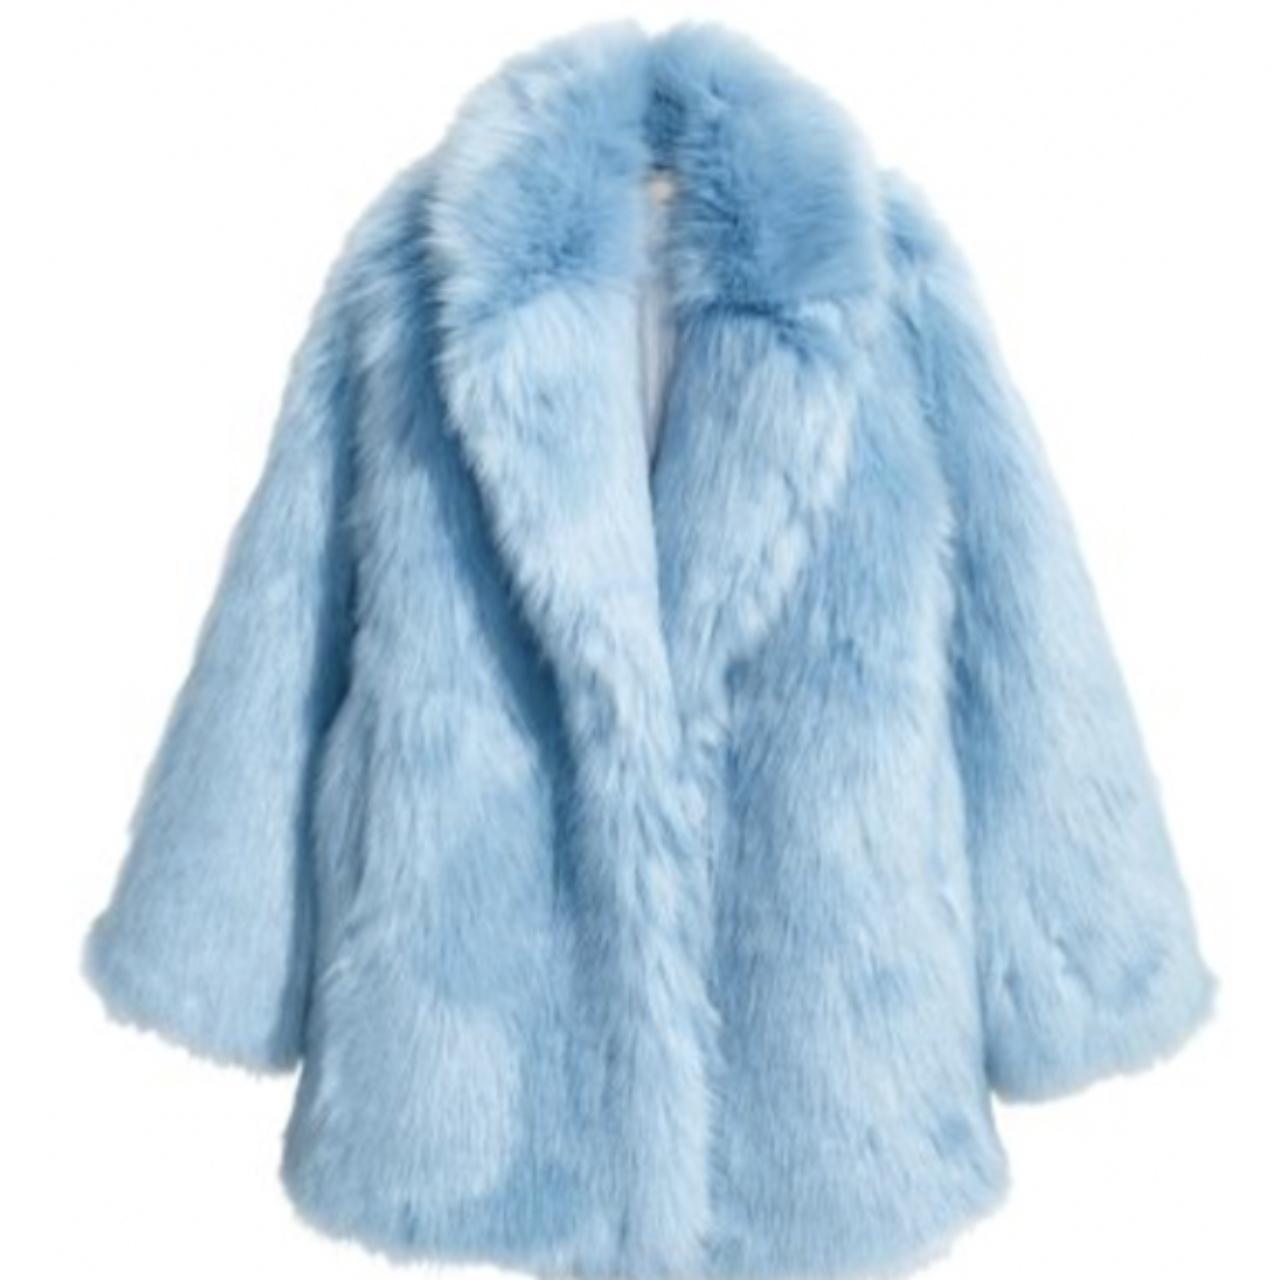 H&M Women's Blue Coat